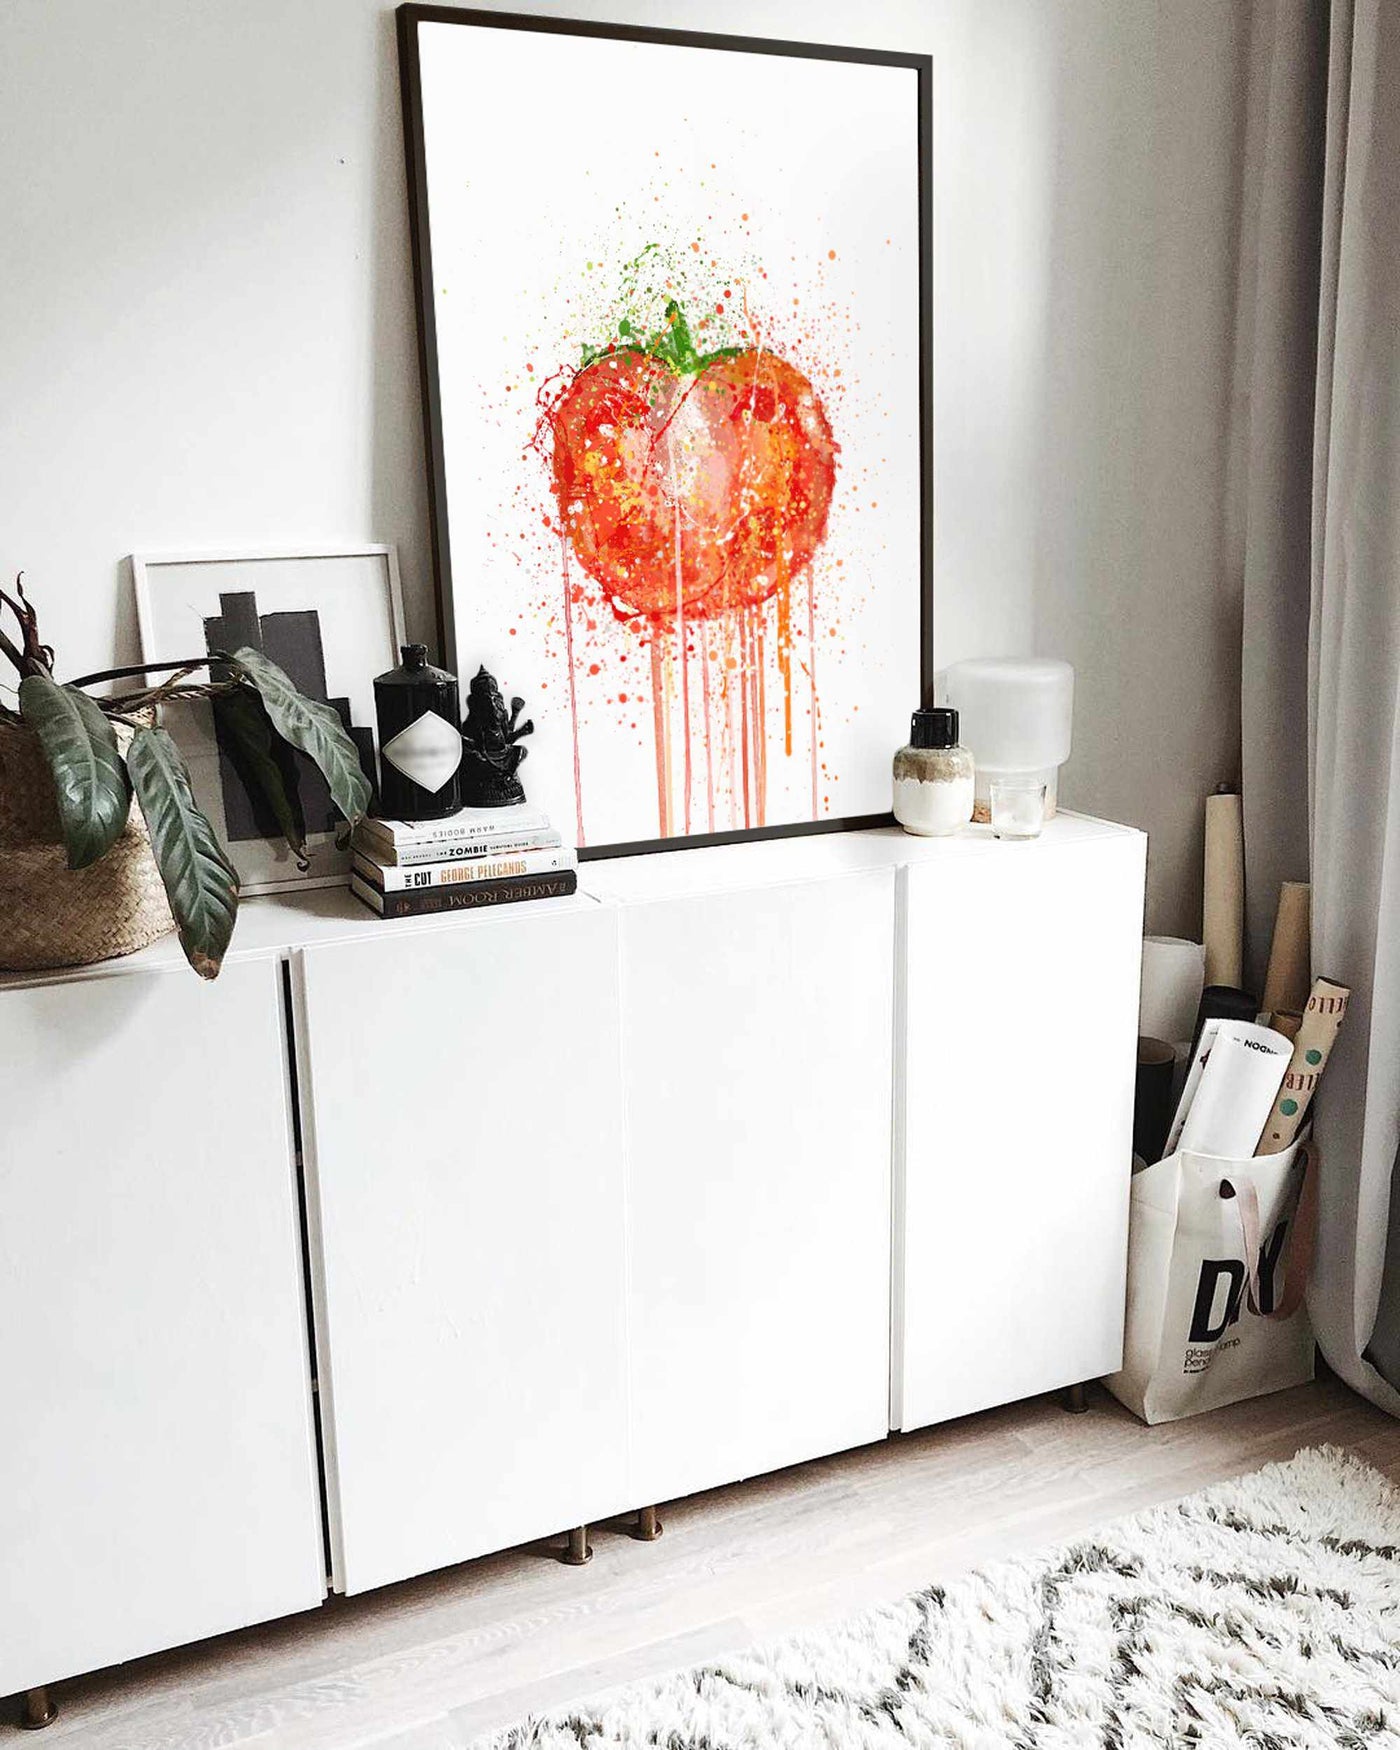 Tomato Vegetable Wall Art Print